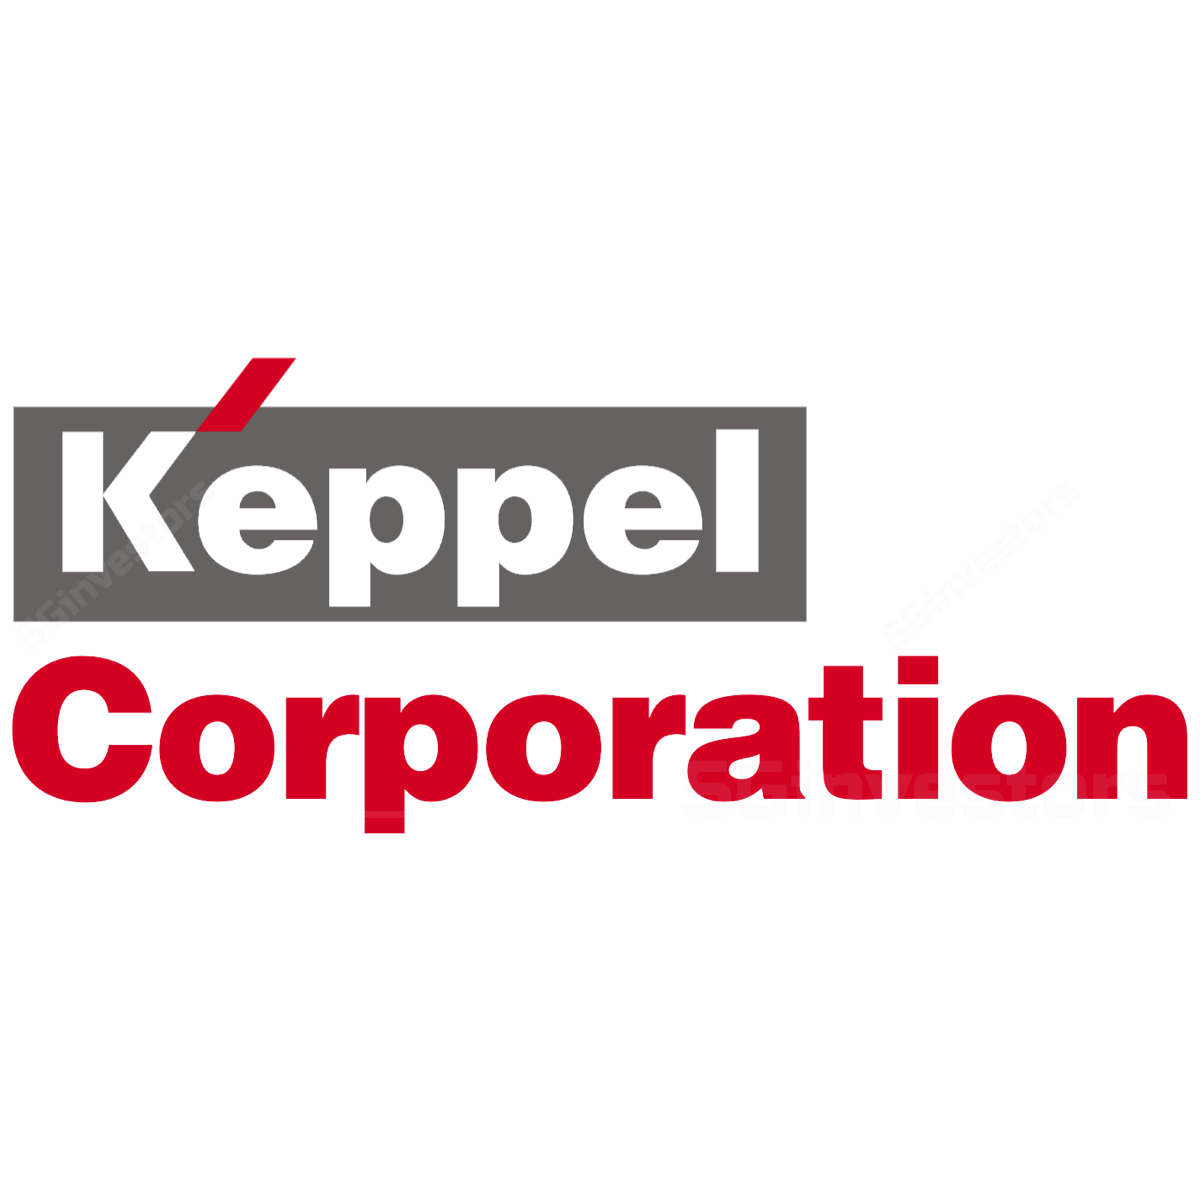 Keppel Corp - Keppel O&M - Keppel Offshore&Marine - Keppel Marine and Deepwater Technology - KMDTech